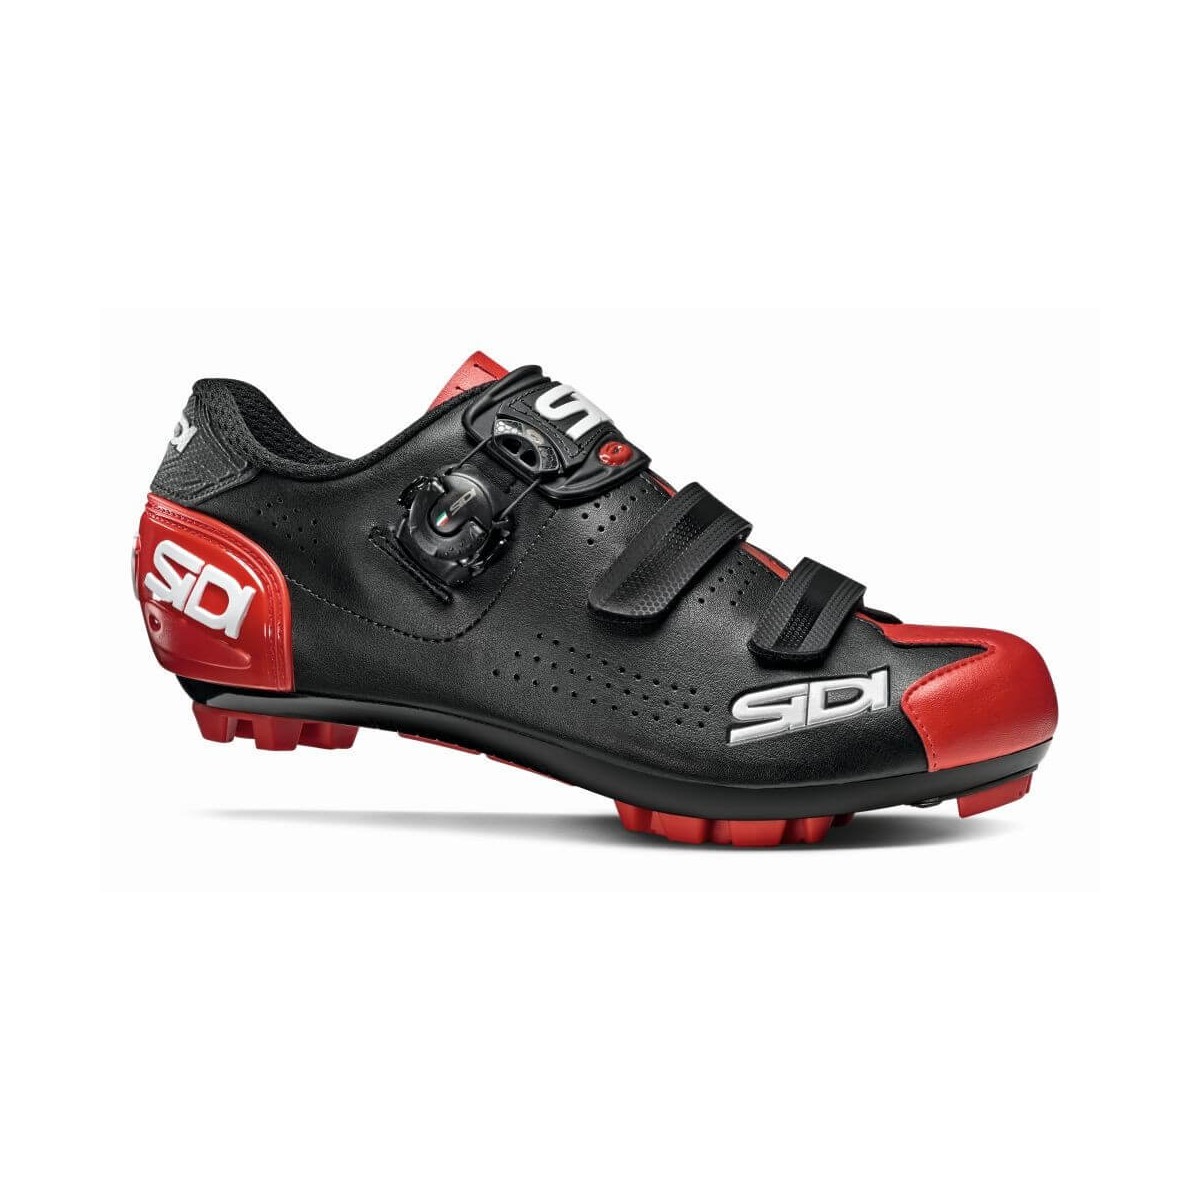 Sidi Trace 2 MTB Shoes Black Red, Size 45 - EUR